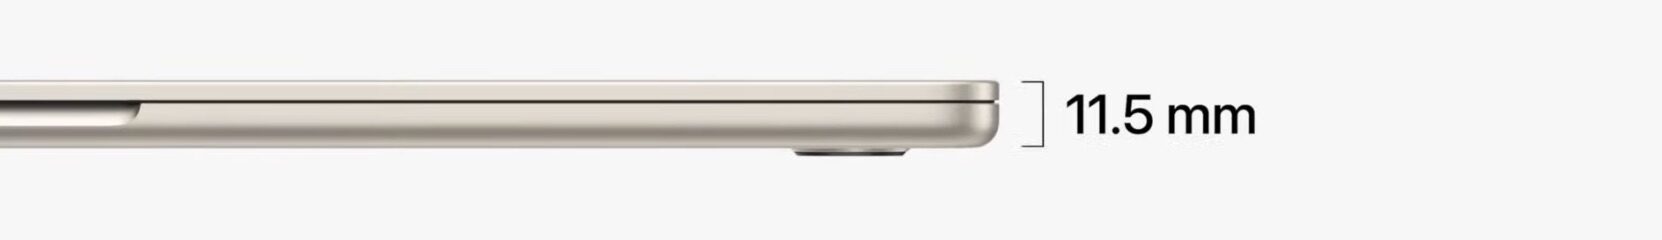 Apple presenta MacBook Air 15 pollici